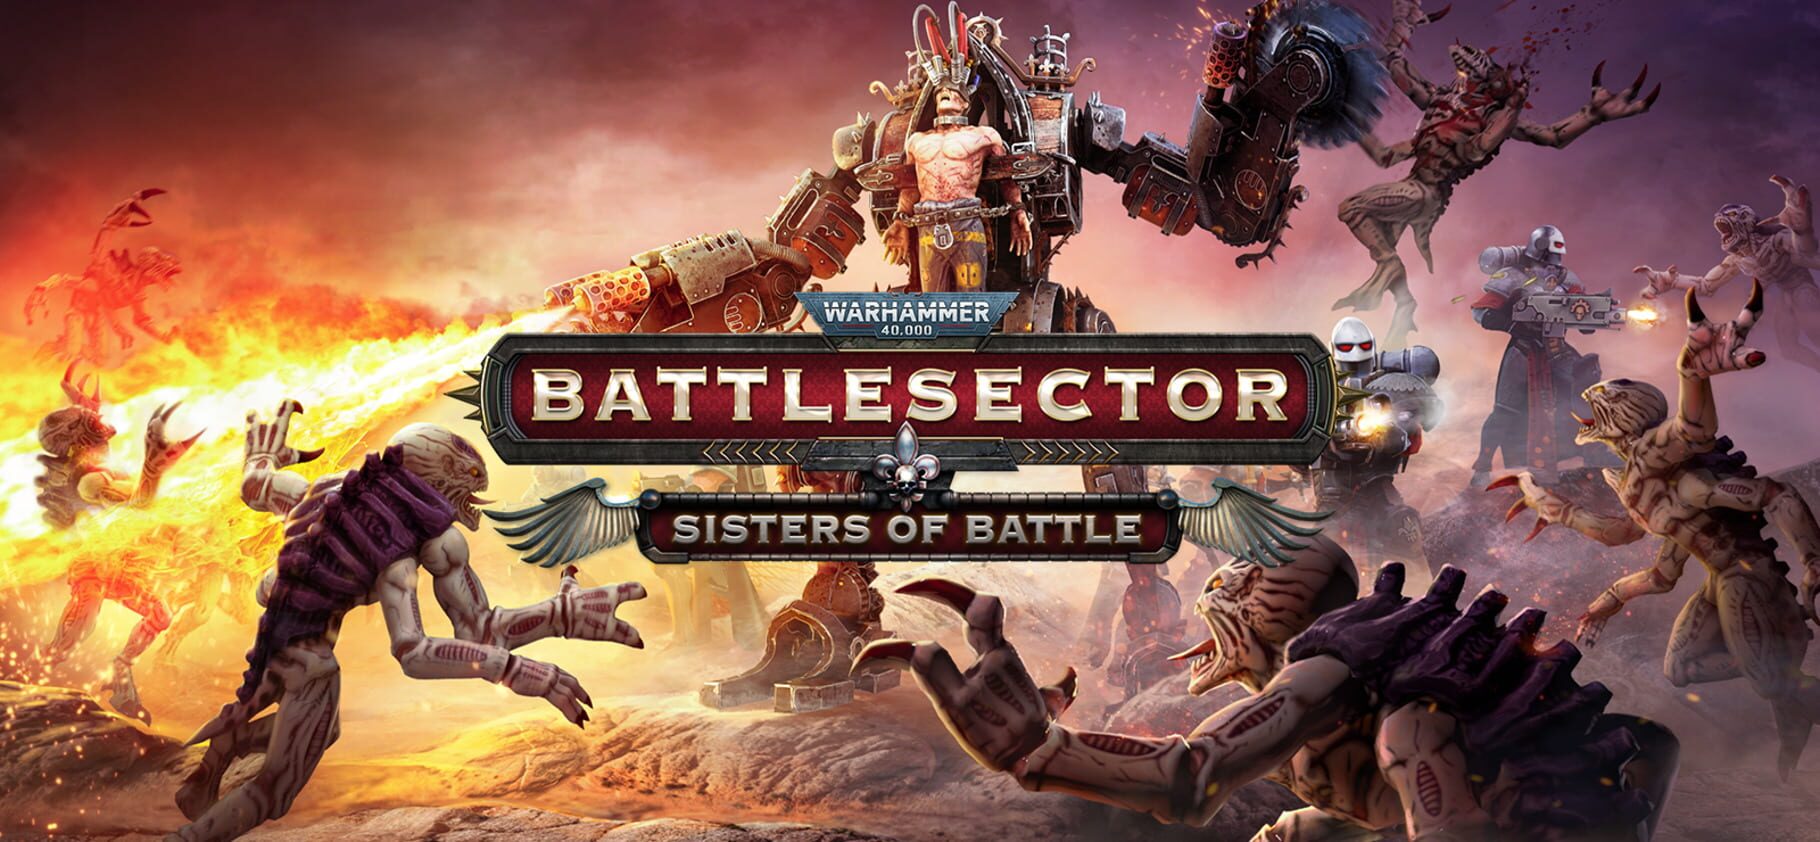 Arte - Warhammer 40,000: Battlesector - Sisters of Battle